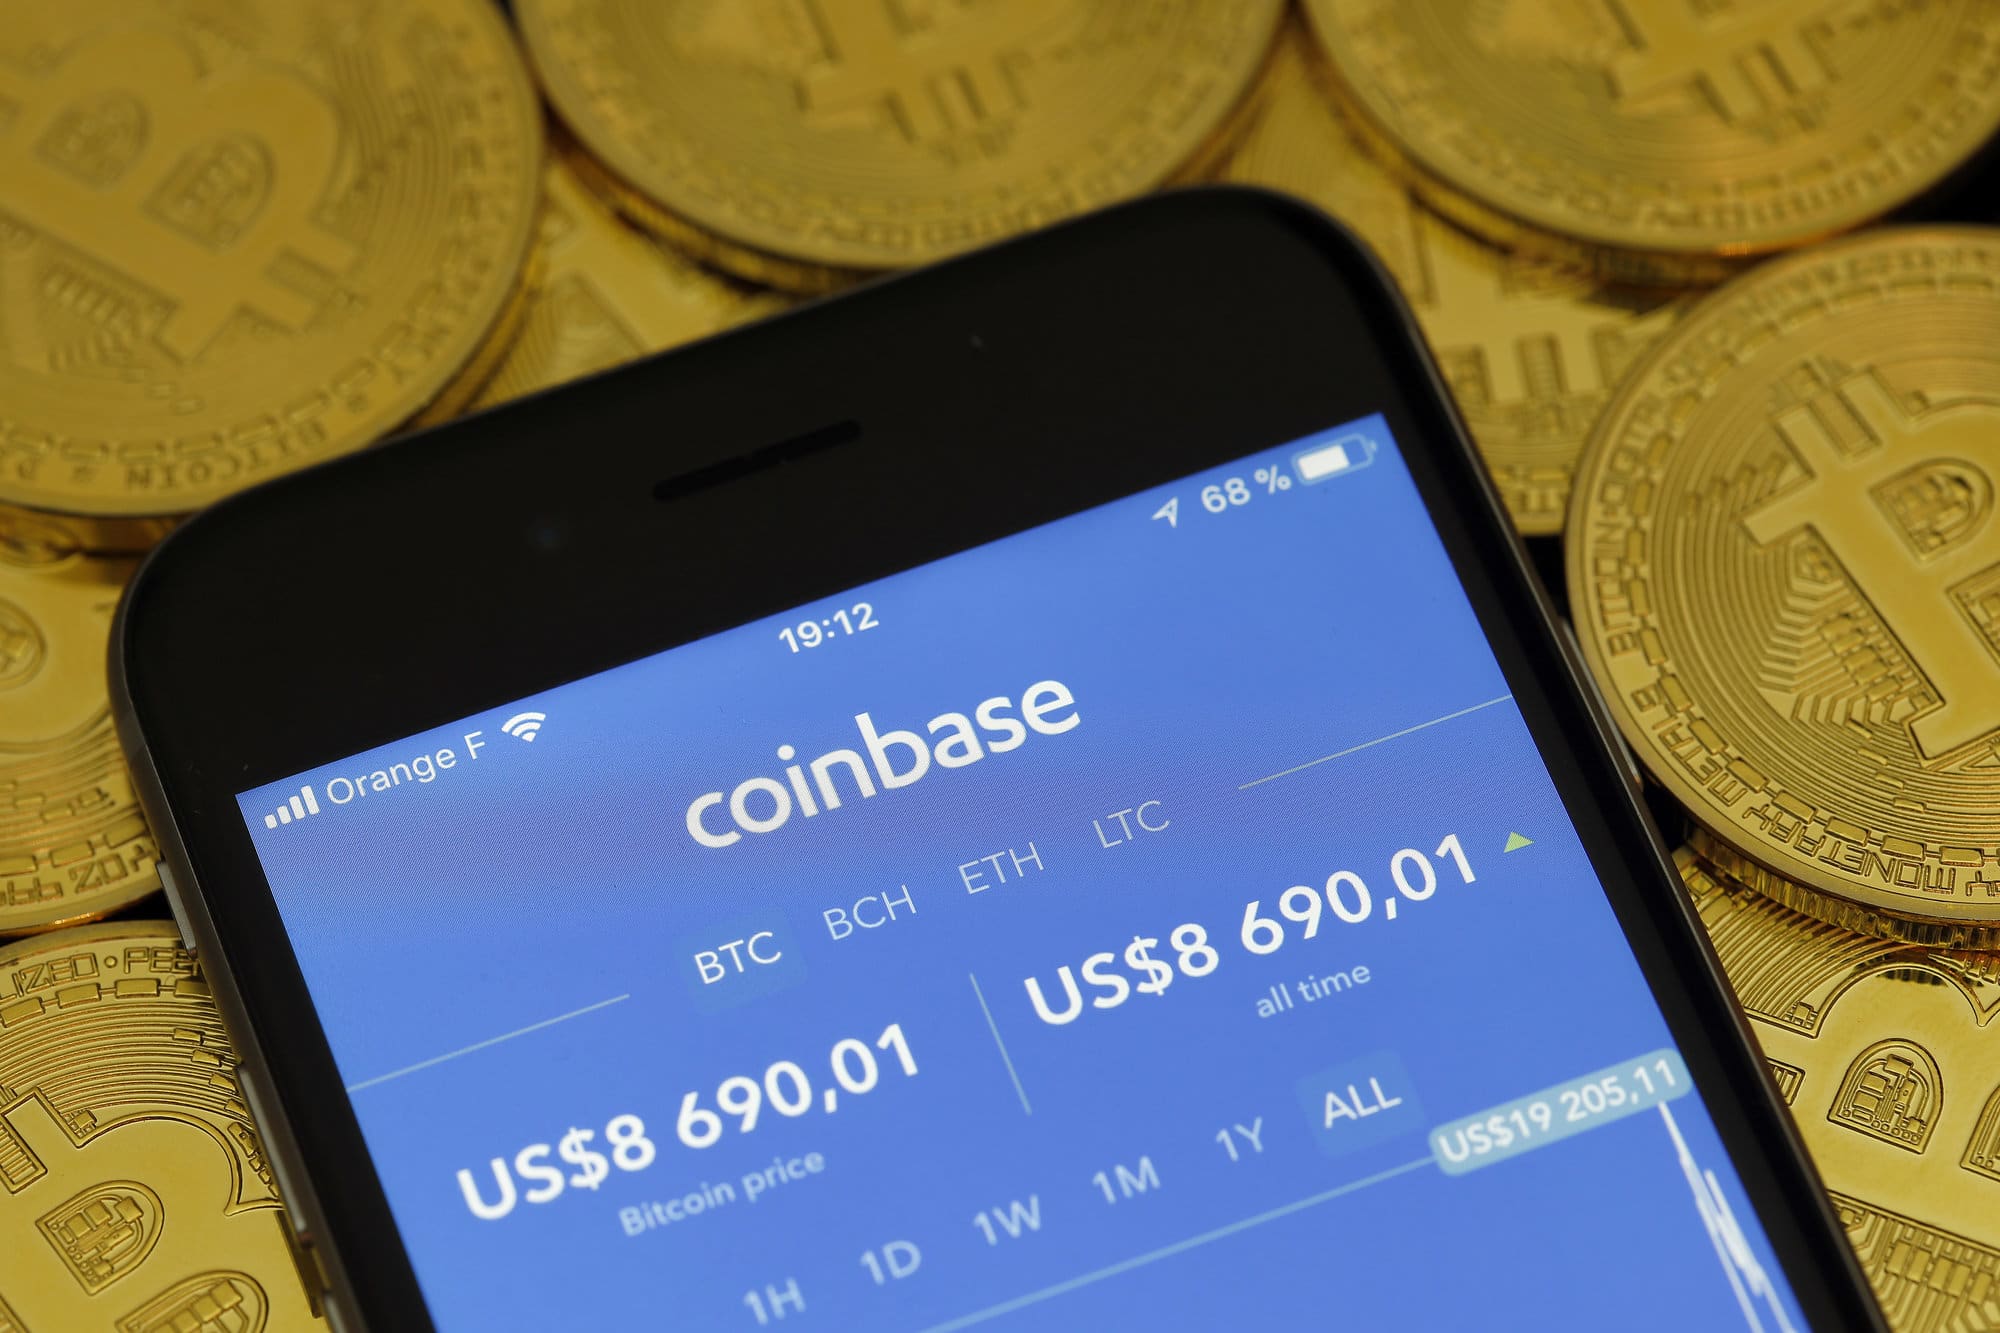 Coinbase plans to go public through a direct listing